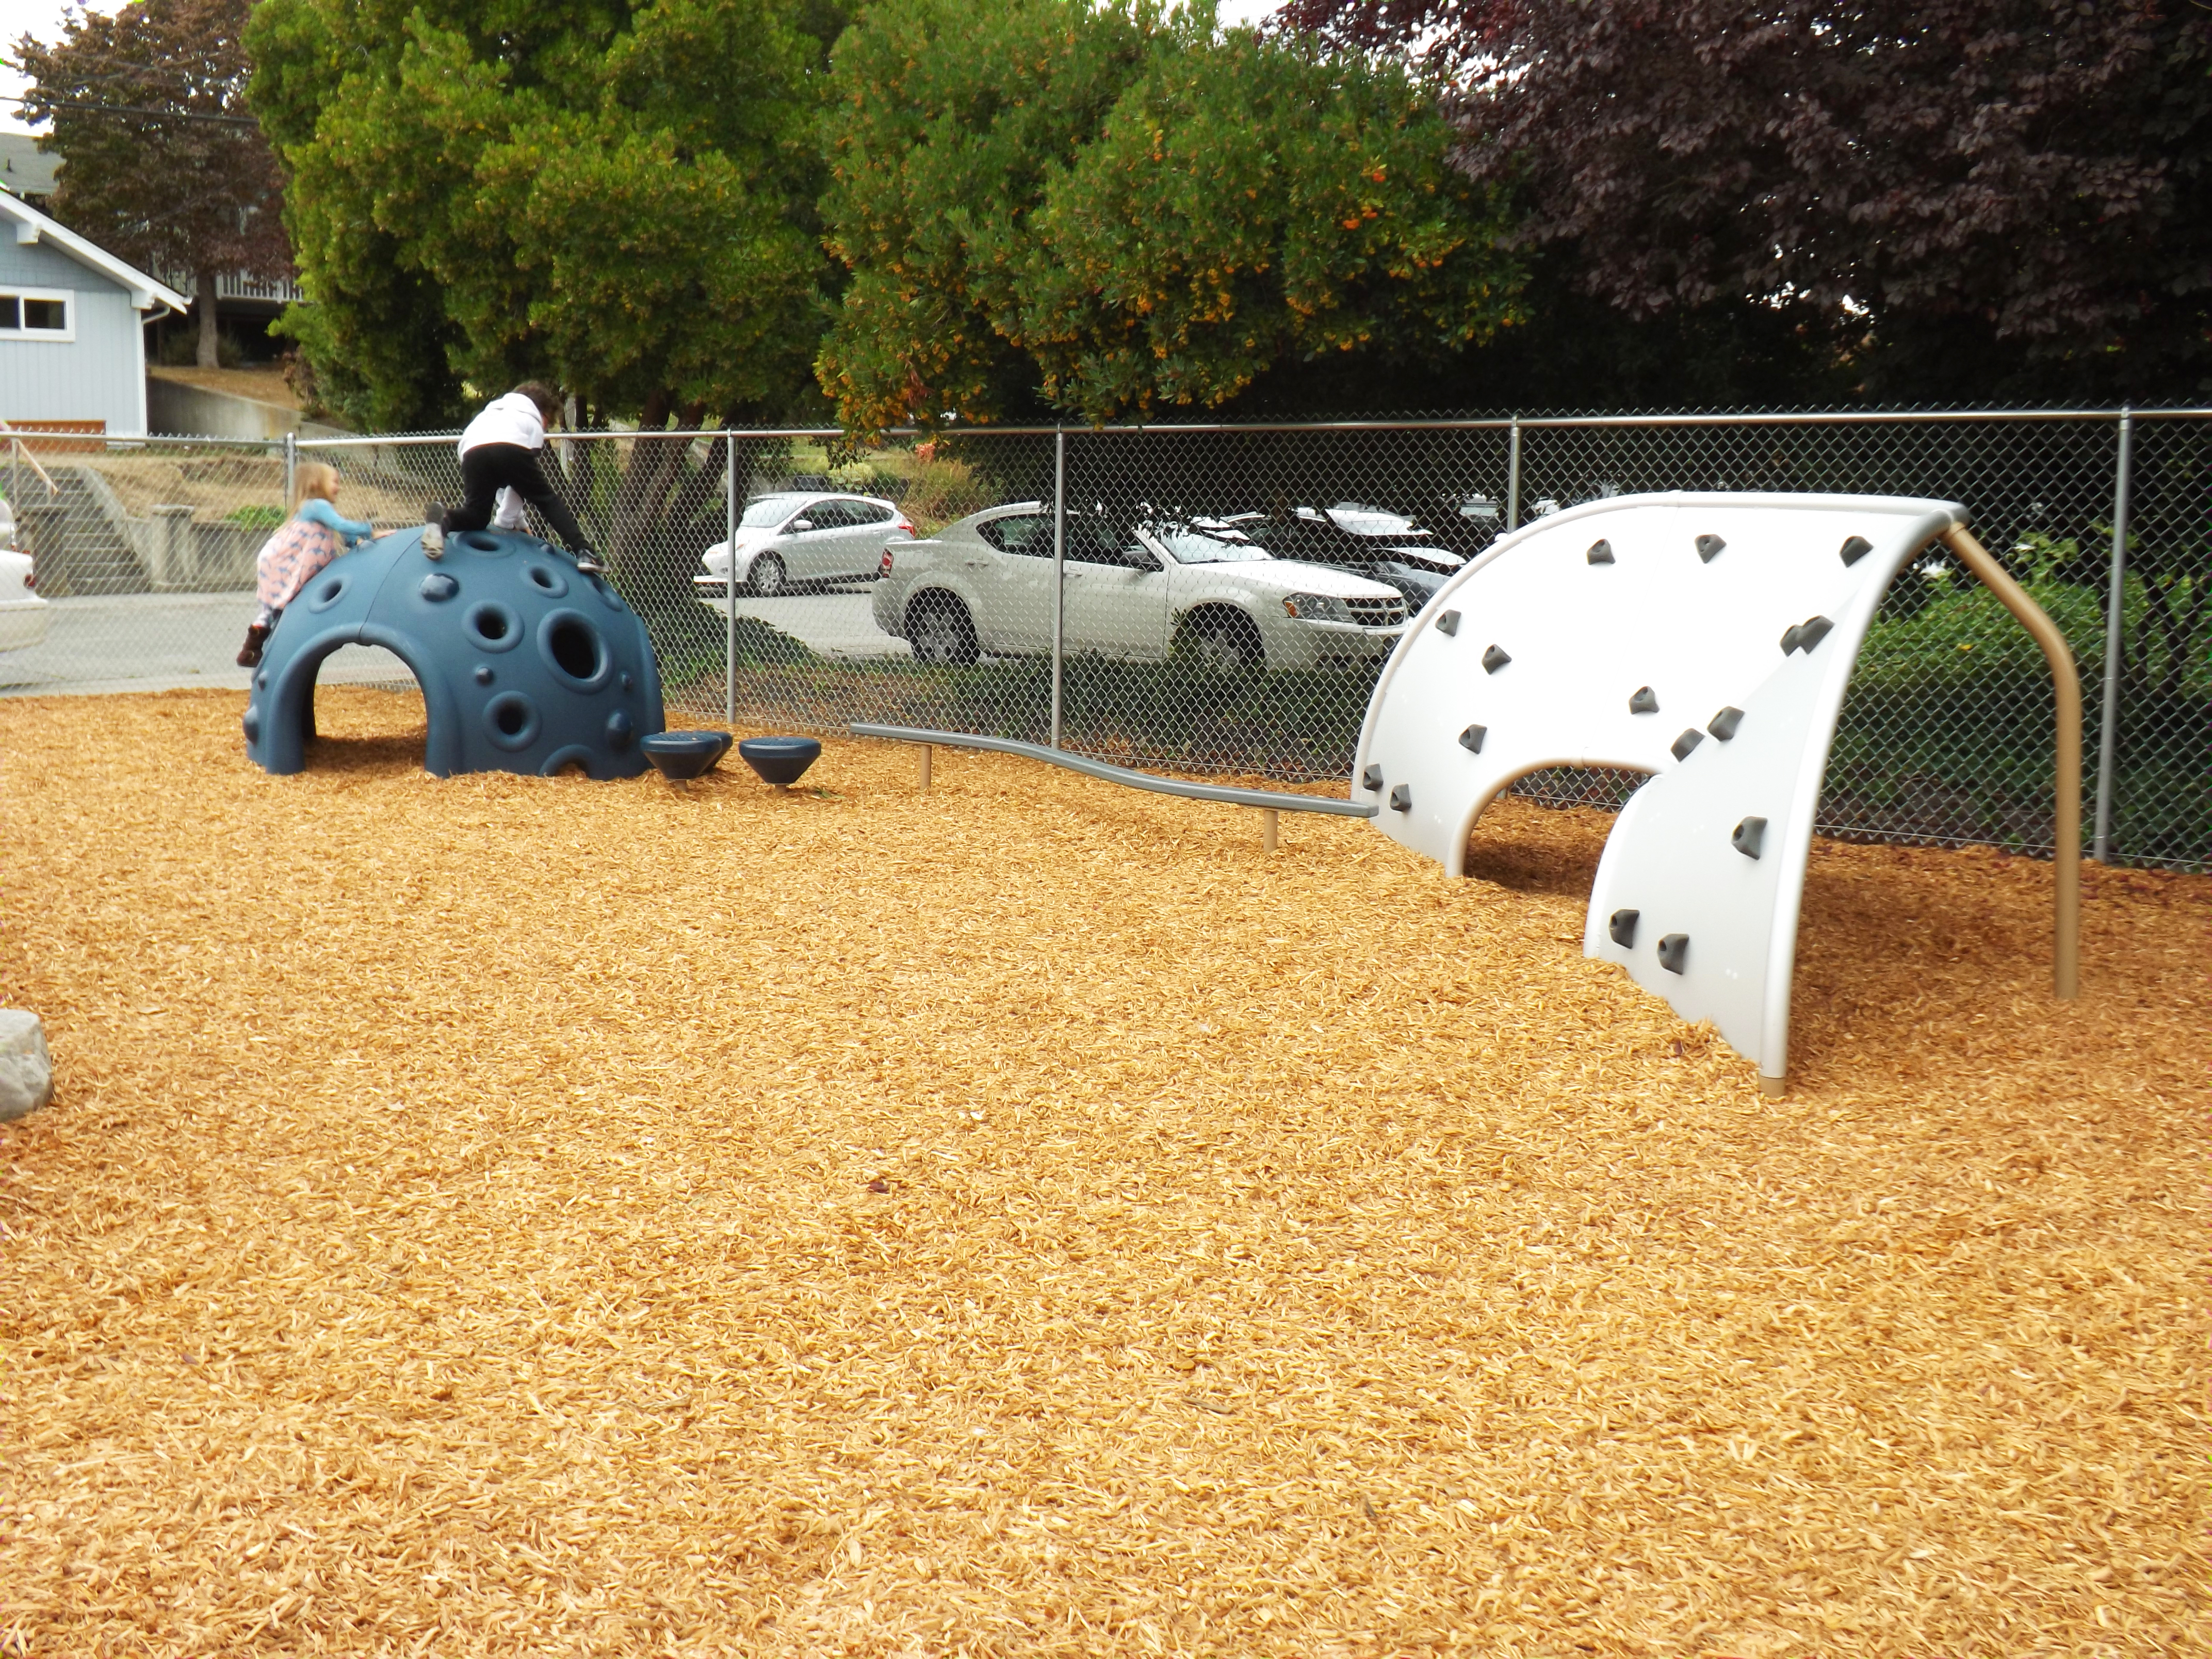 Kitsap Child Care and Preschool Playground